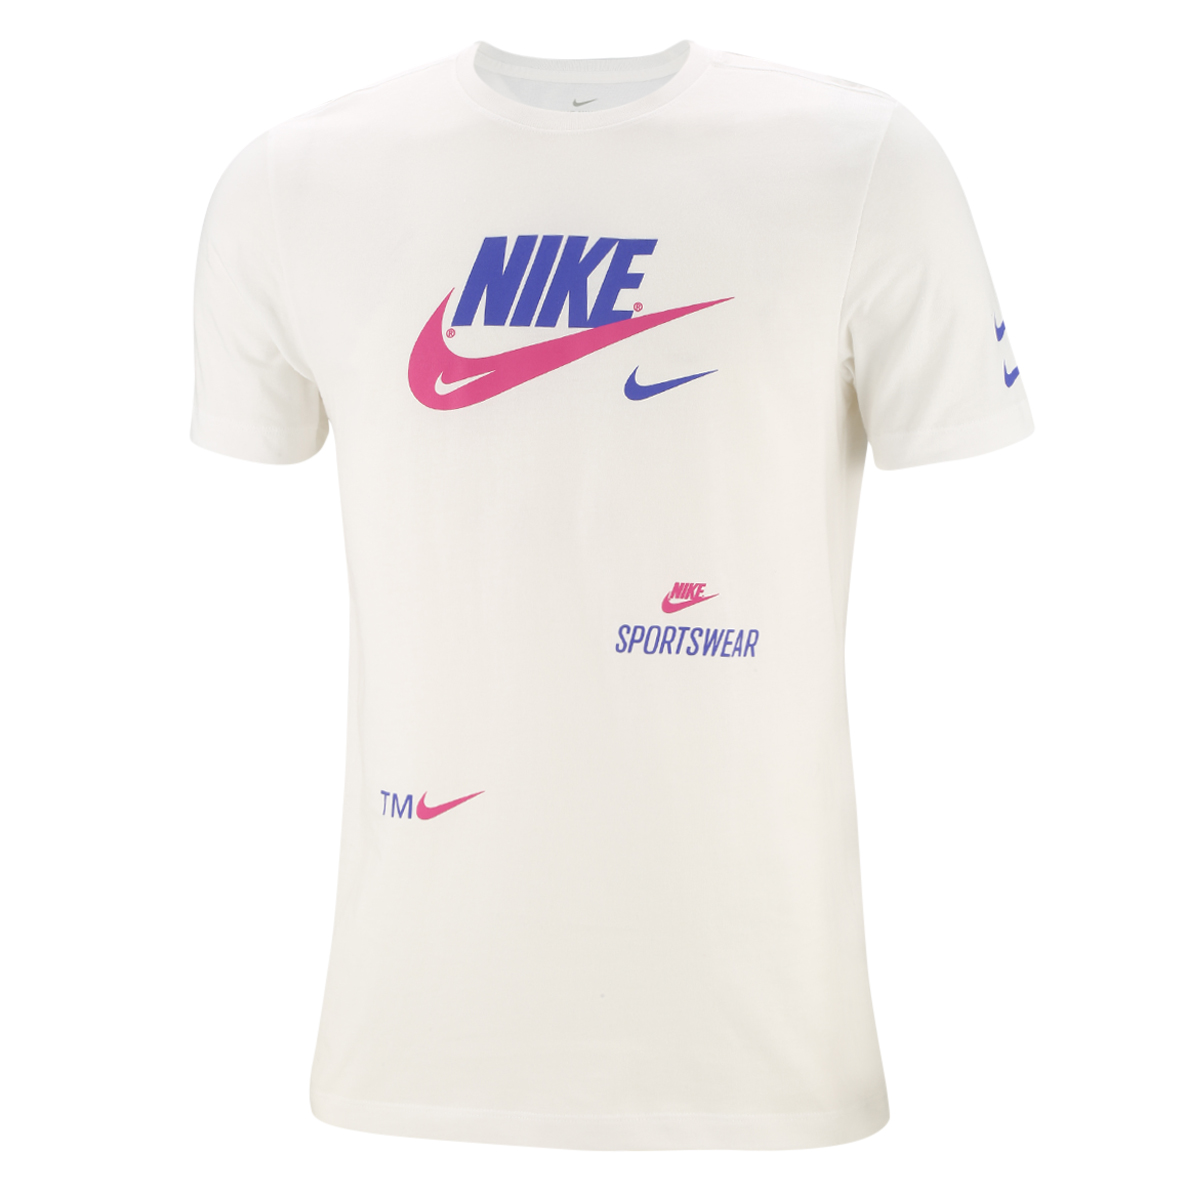 Remera Nike Sportswear,  image number null